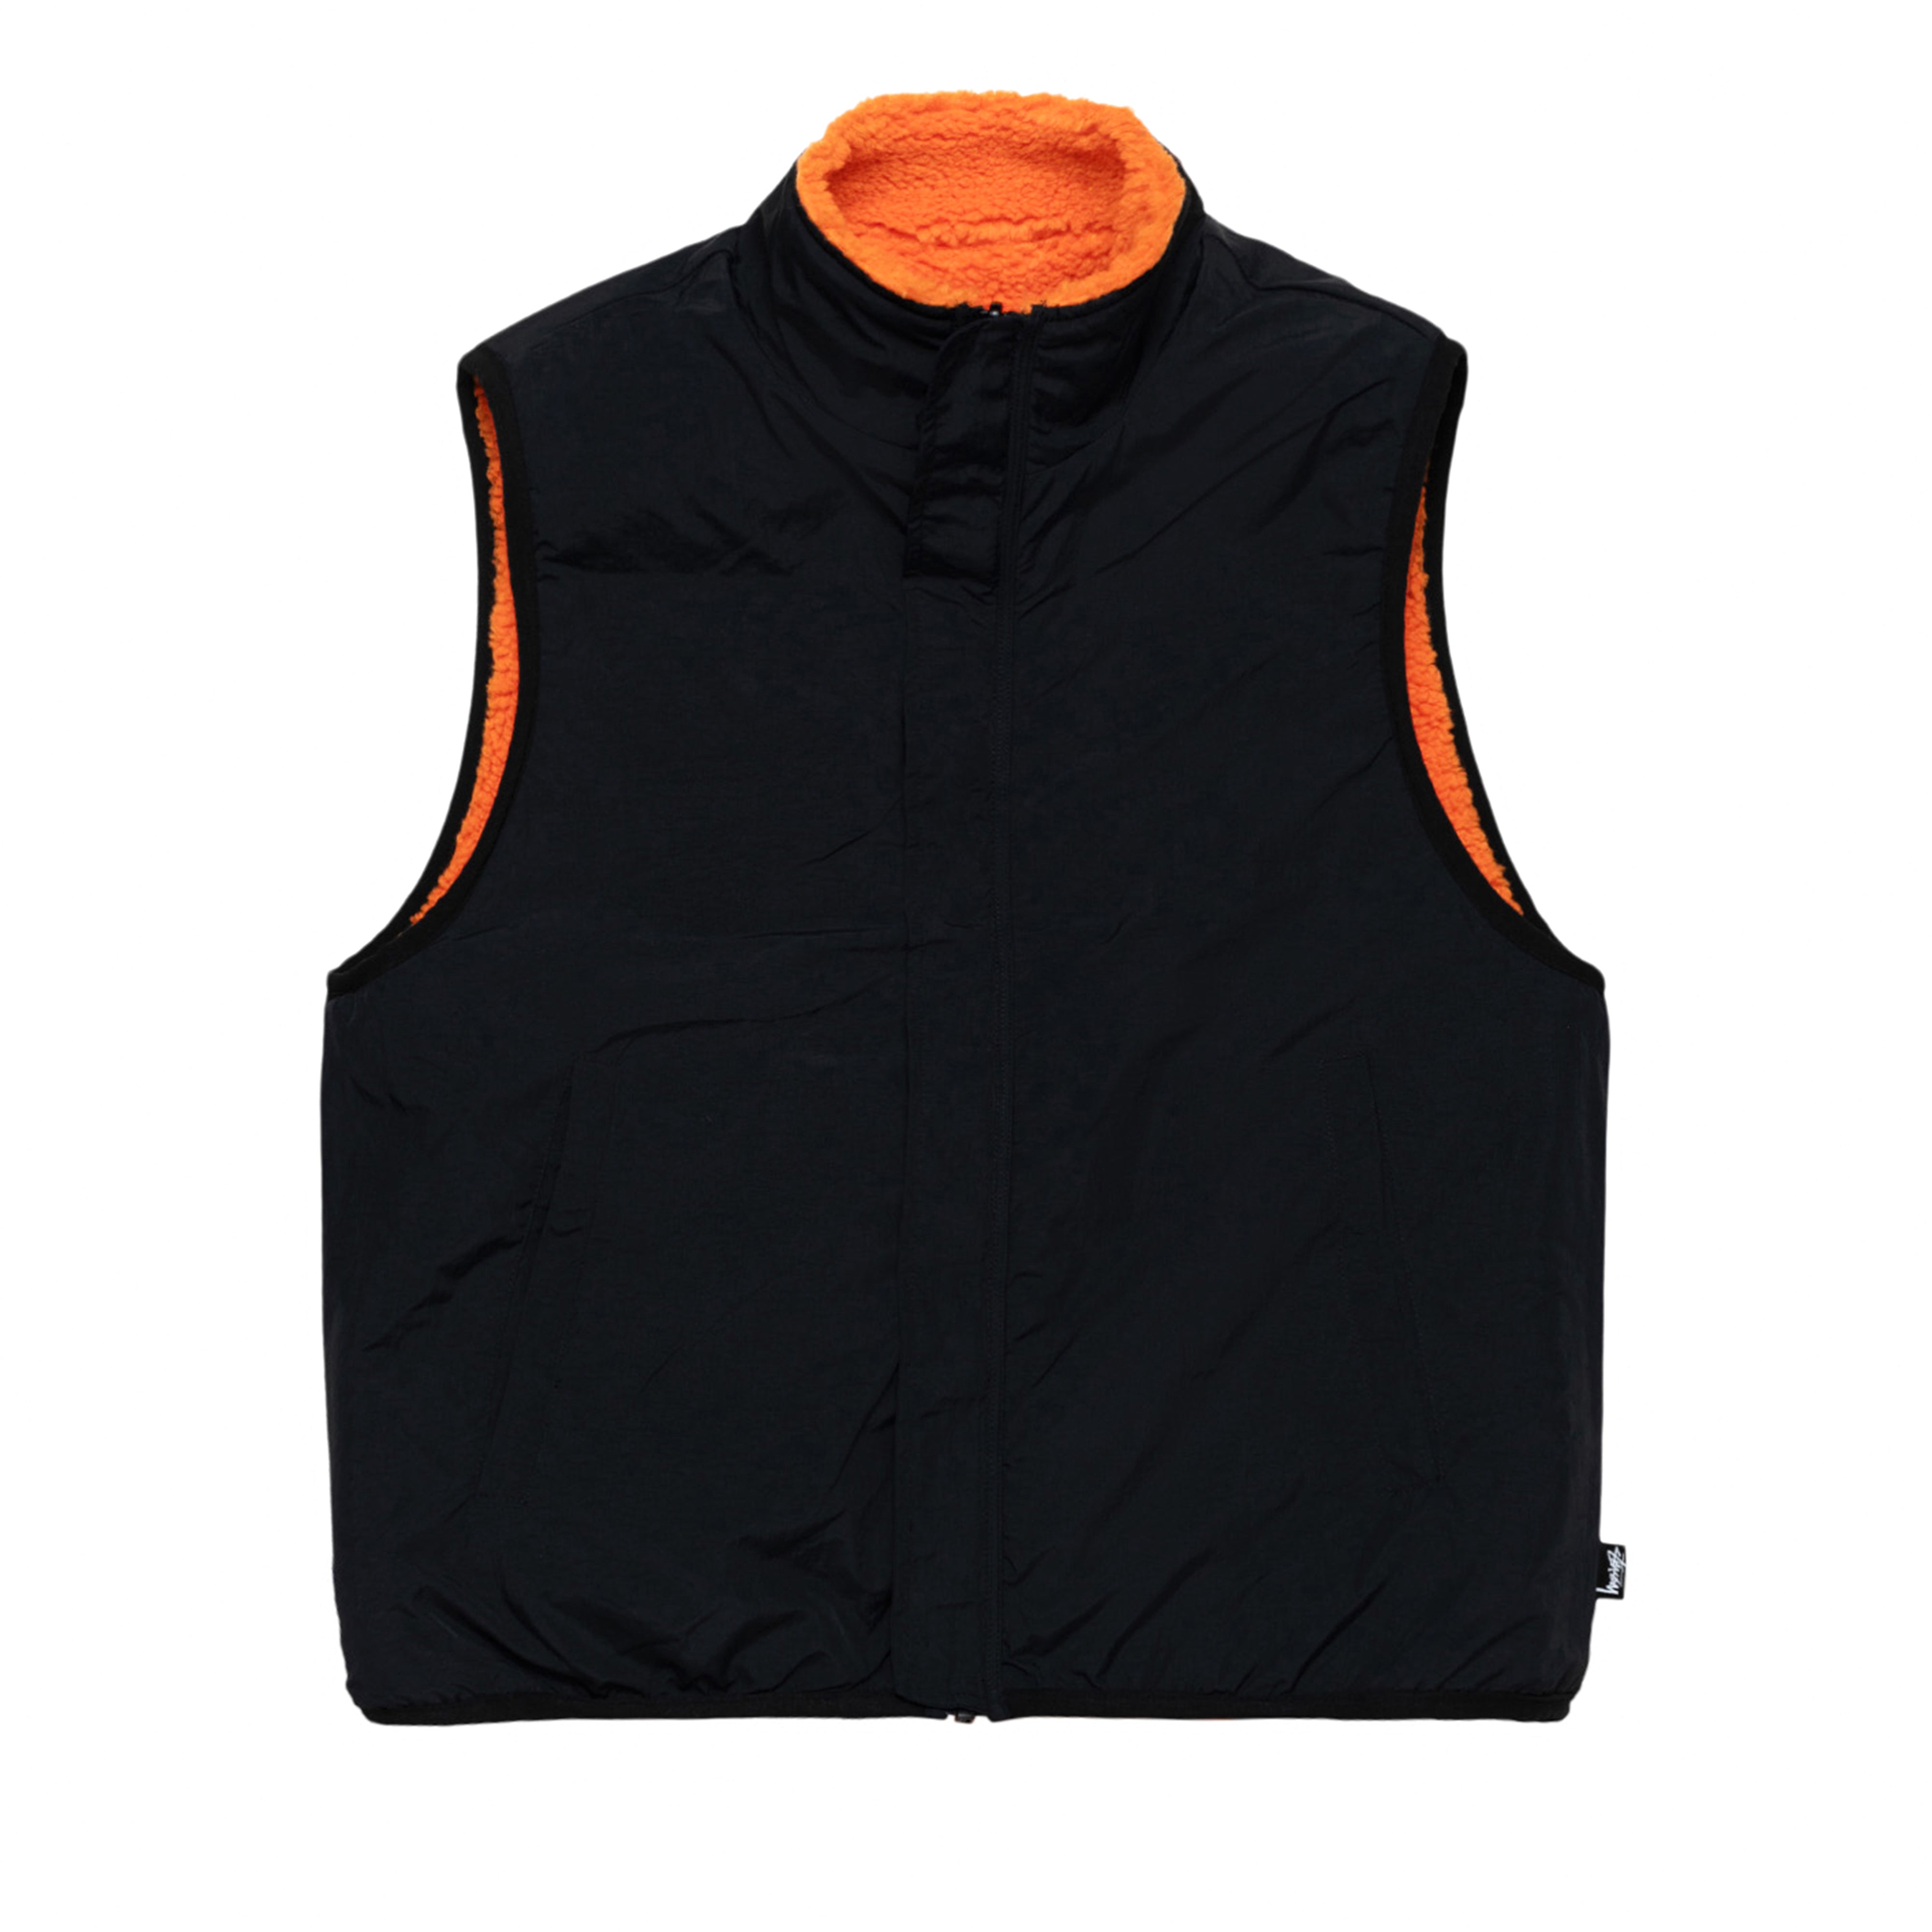 Stüssy - Sherpa Reversible Vest - (Tangerine)